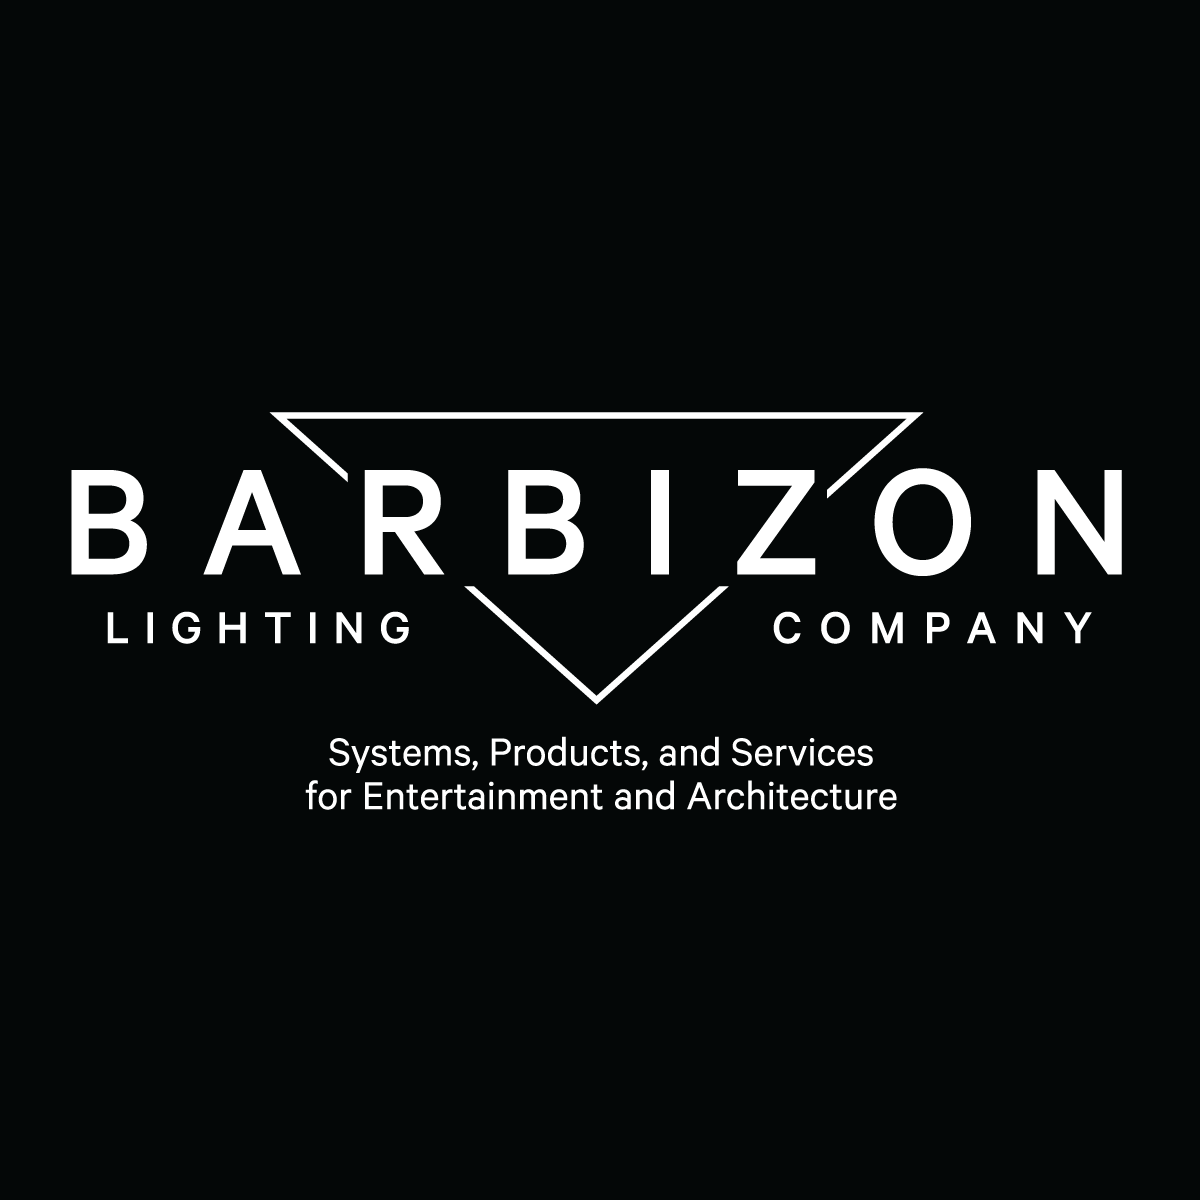 Barbizon Lighting Company